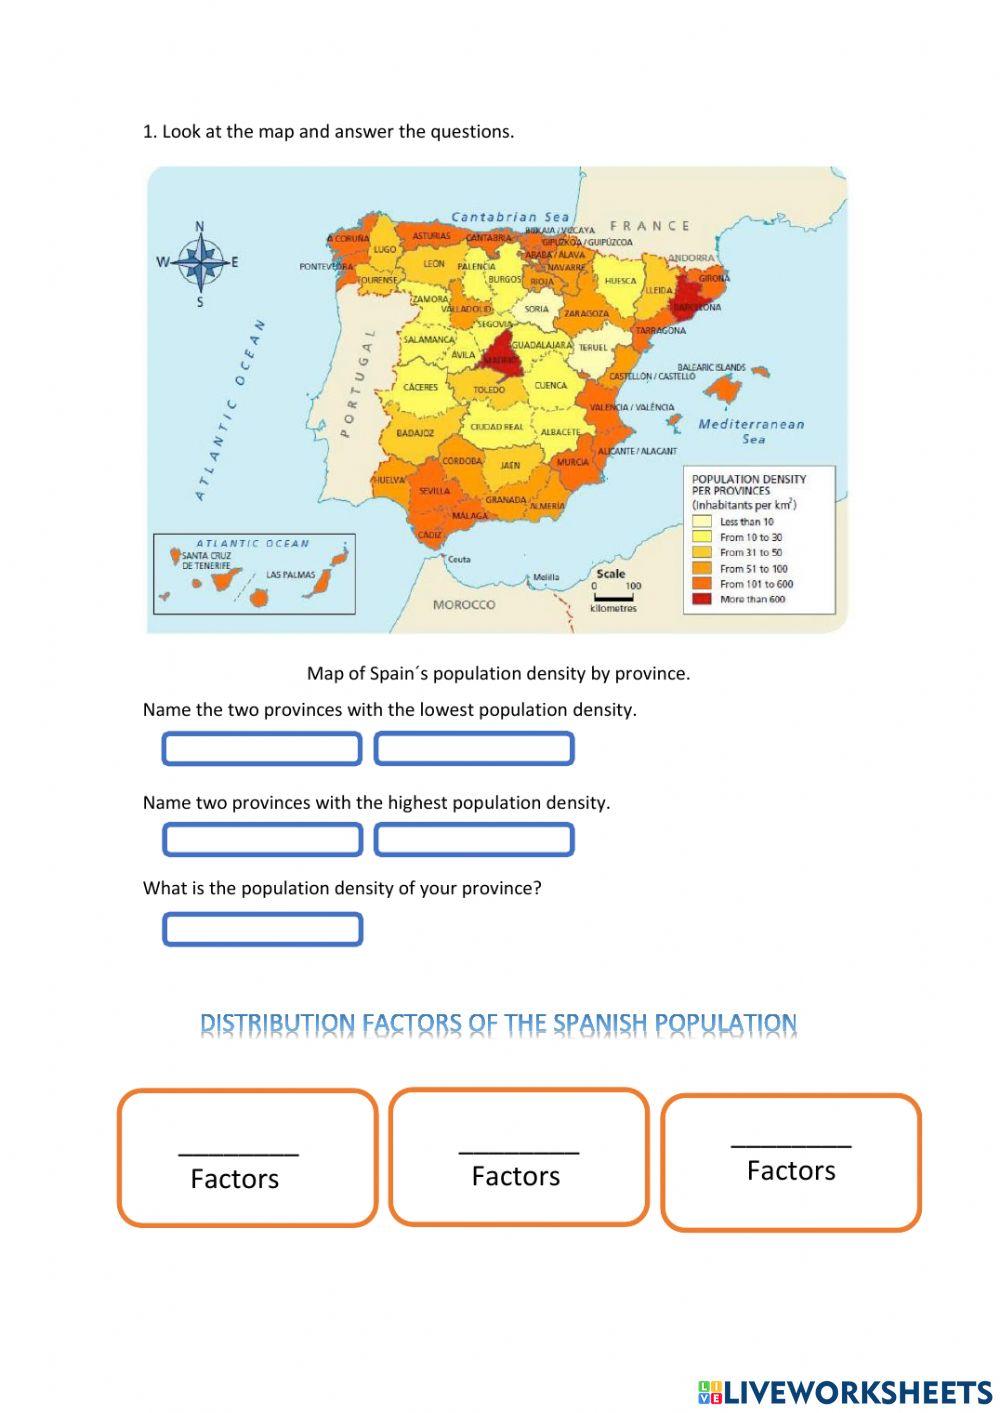 Populaton of Spain and factors